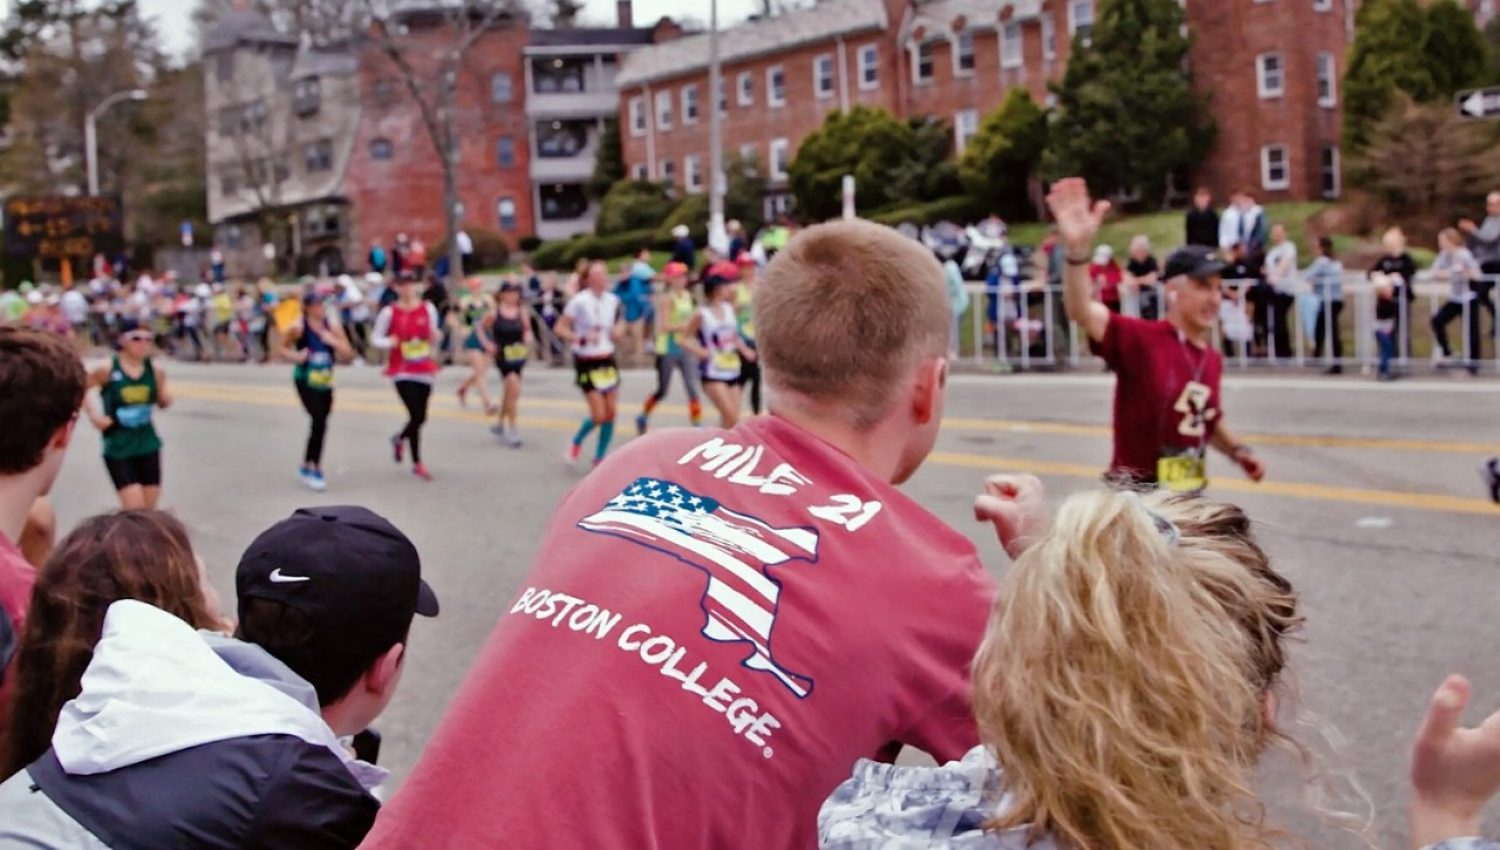 Spectators cheering at the Boston Marathon